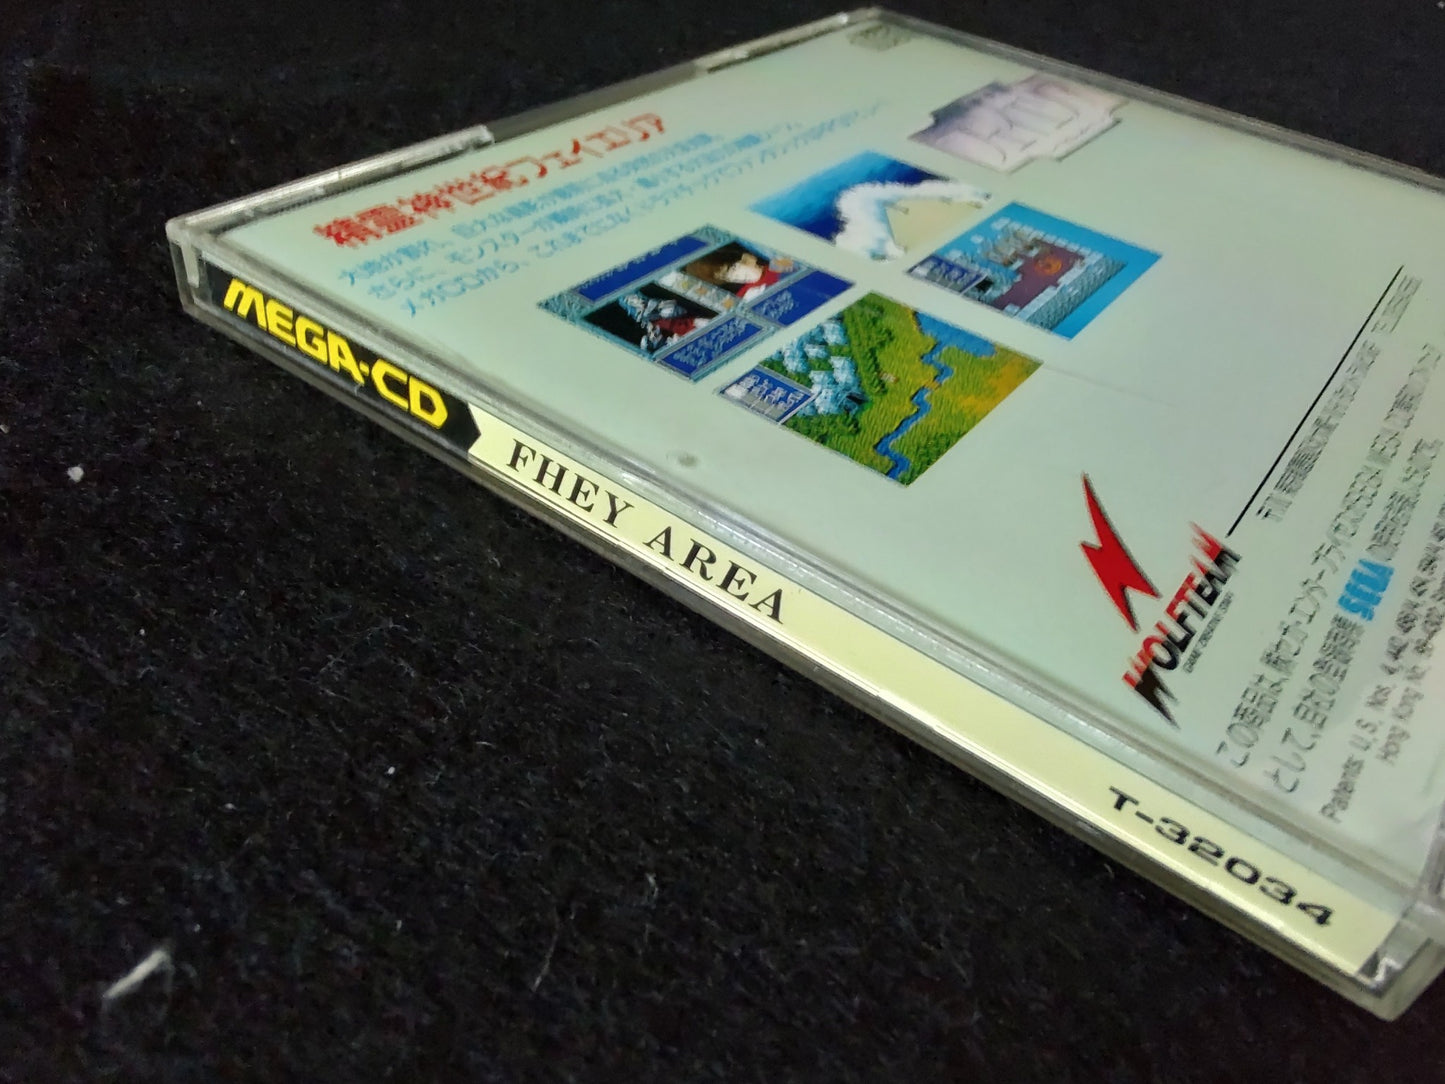 FHEY AREA MEGA CD shooter game Disk, Manual, Box set, Working-f0925-